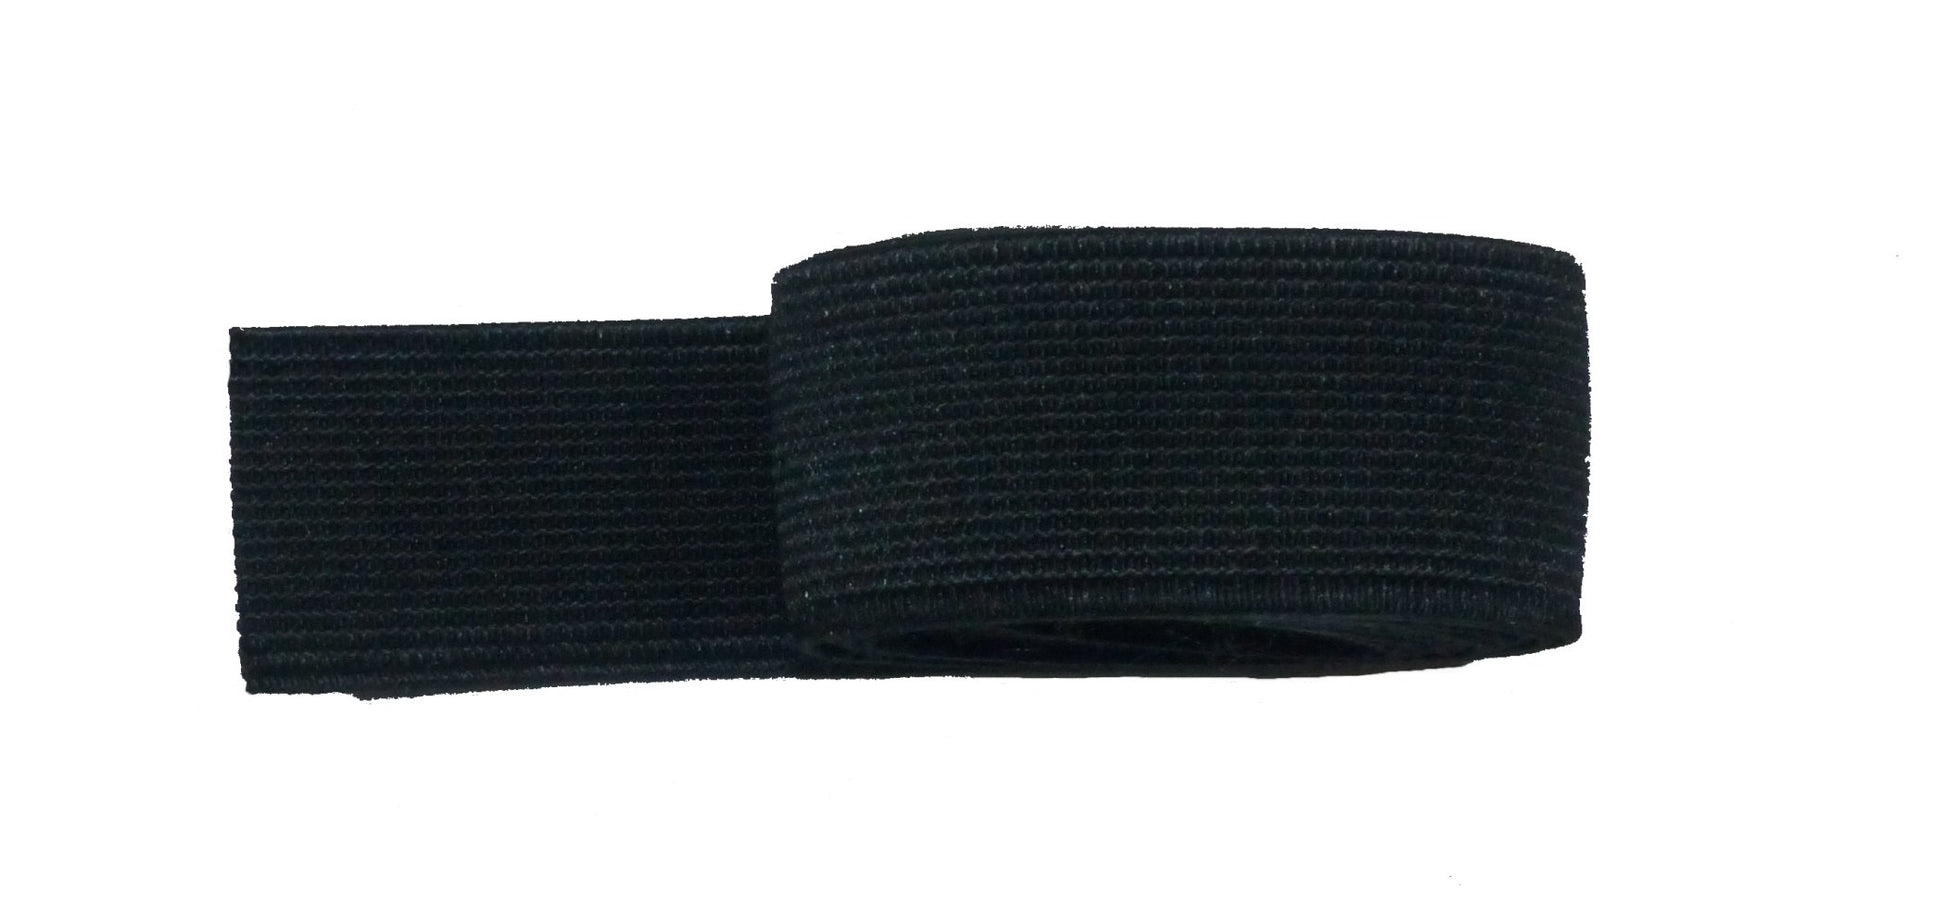 Benristraps 25mm elastic tape in black, five metres